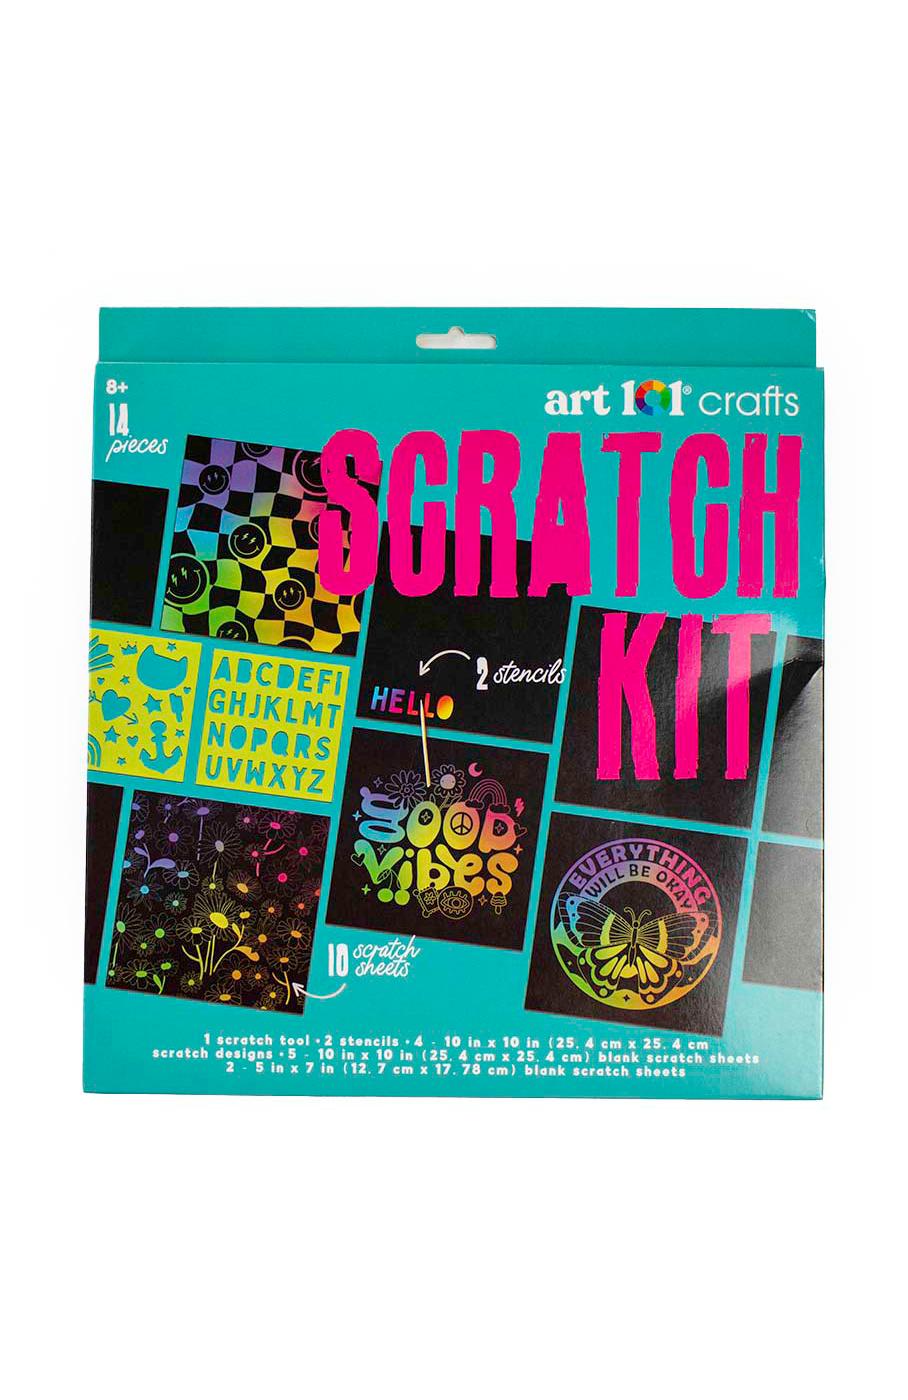 Art 101 Crafts Scratch Kit; image 1 of 6